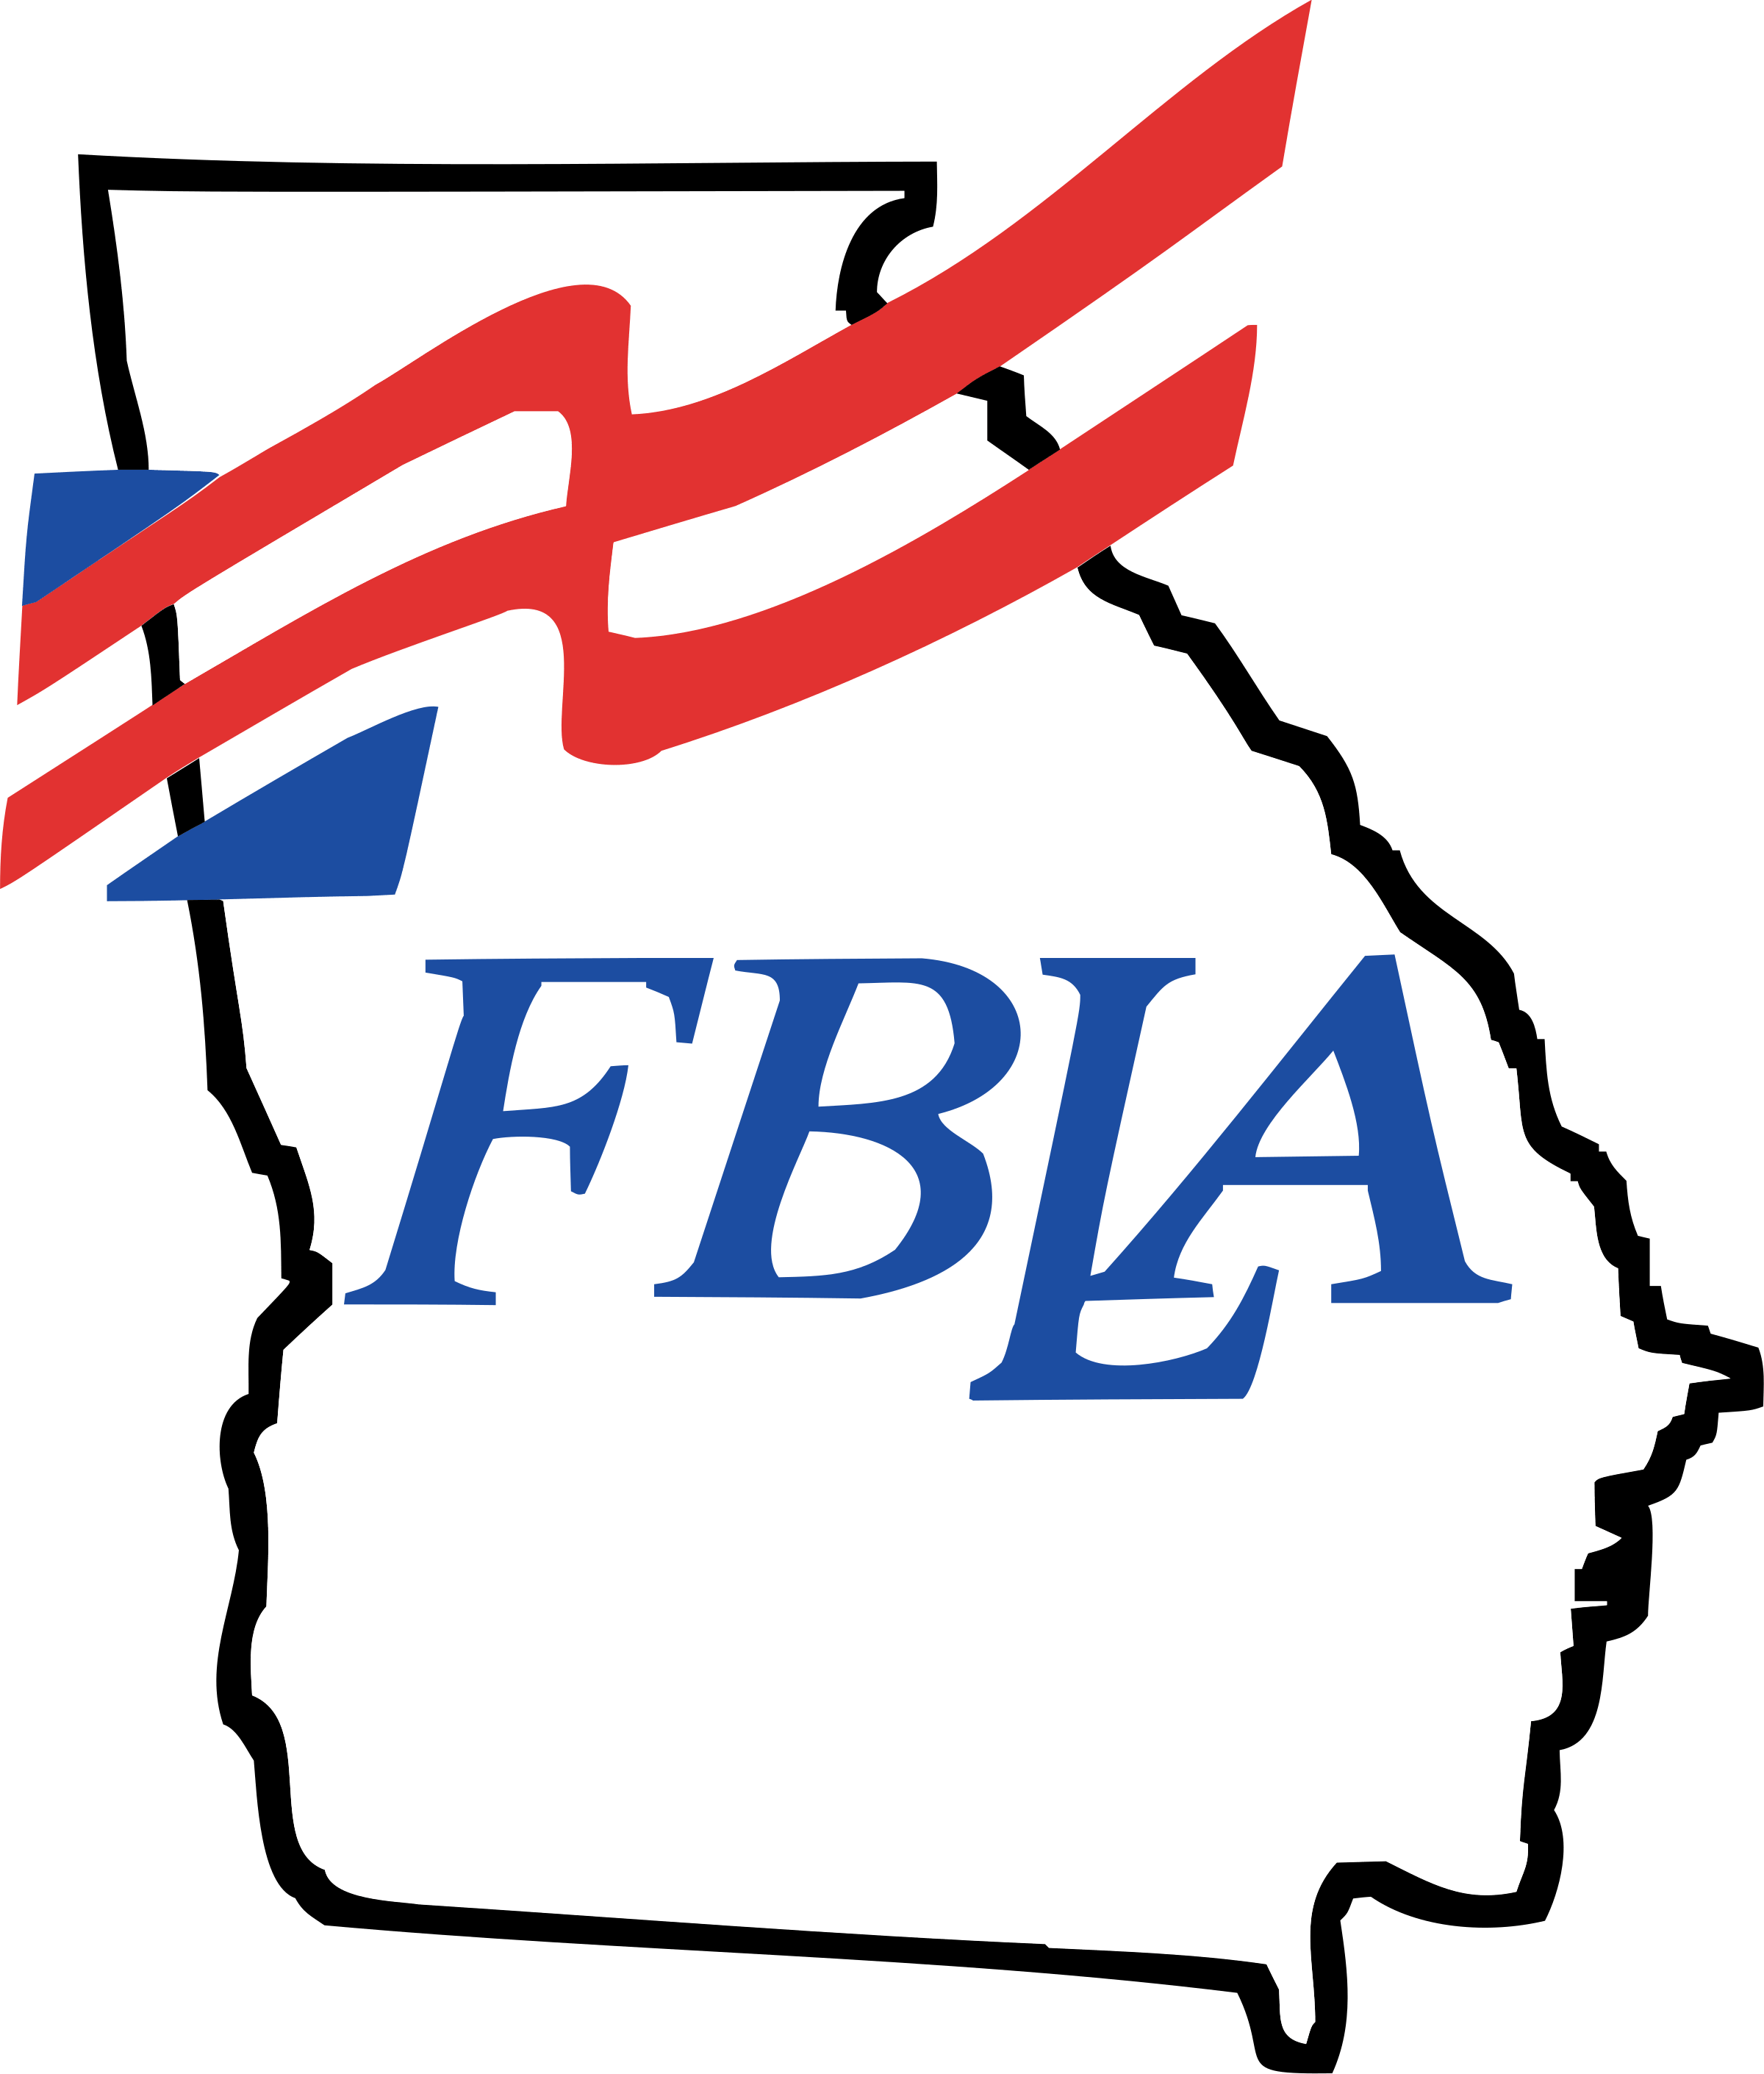 FBLA Logo - FBLA Logo PNG Transparent & SVG Vector - Freebie Supply